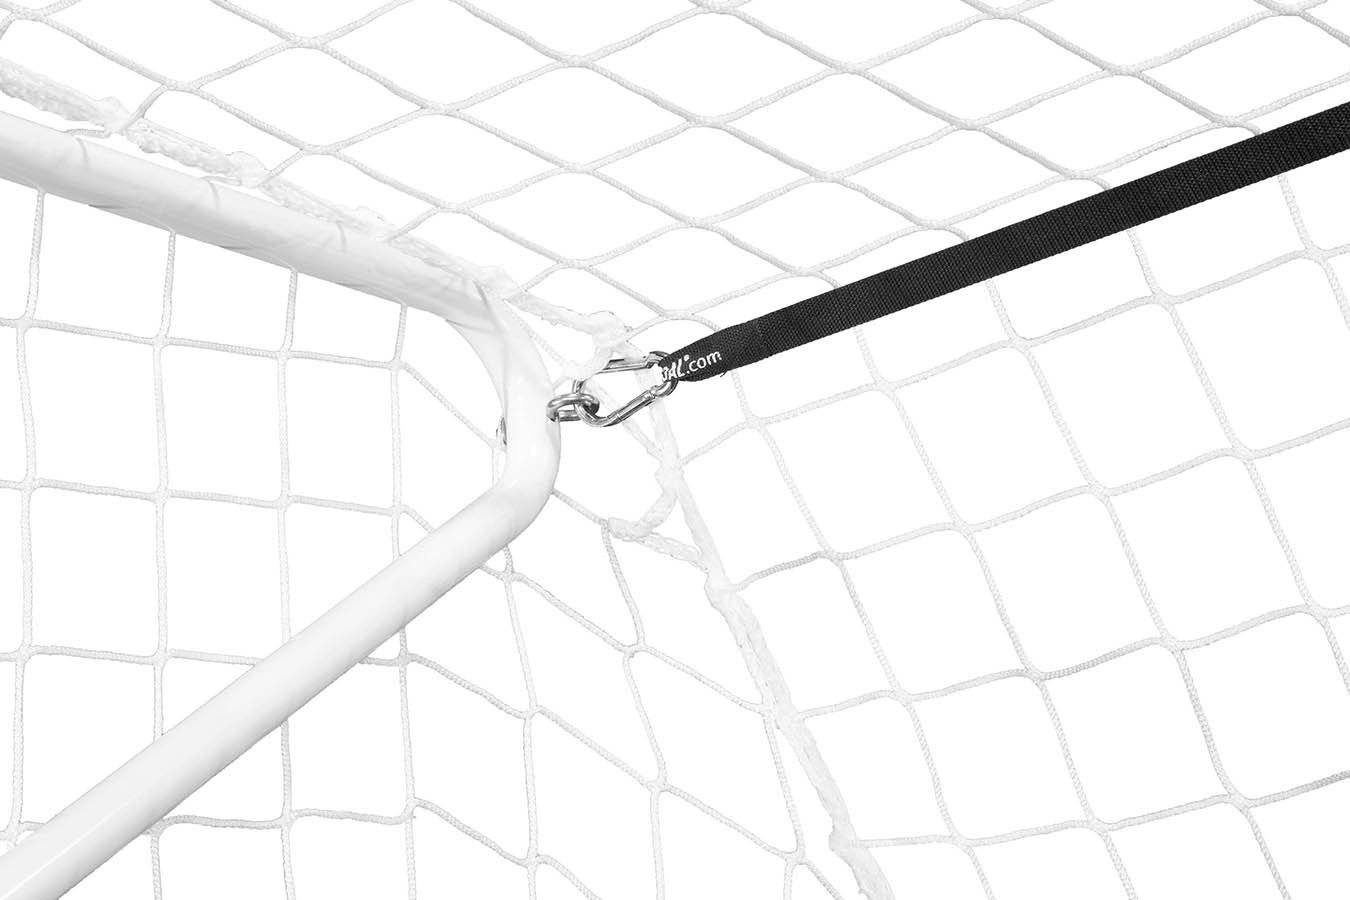 Kwikgoal Net Support Strap Set | 10B44 Goal accessories Kwikgoal 